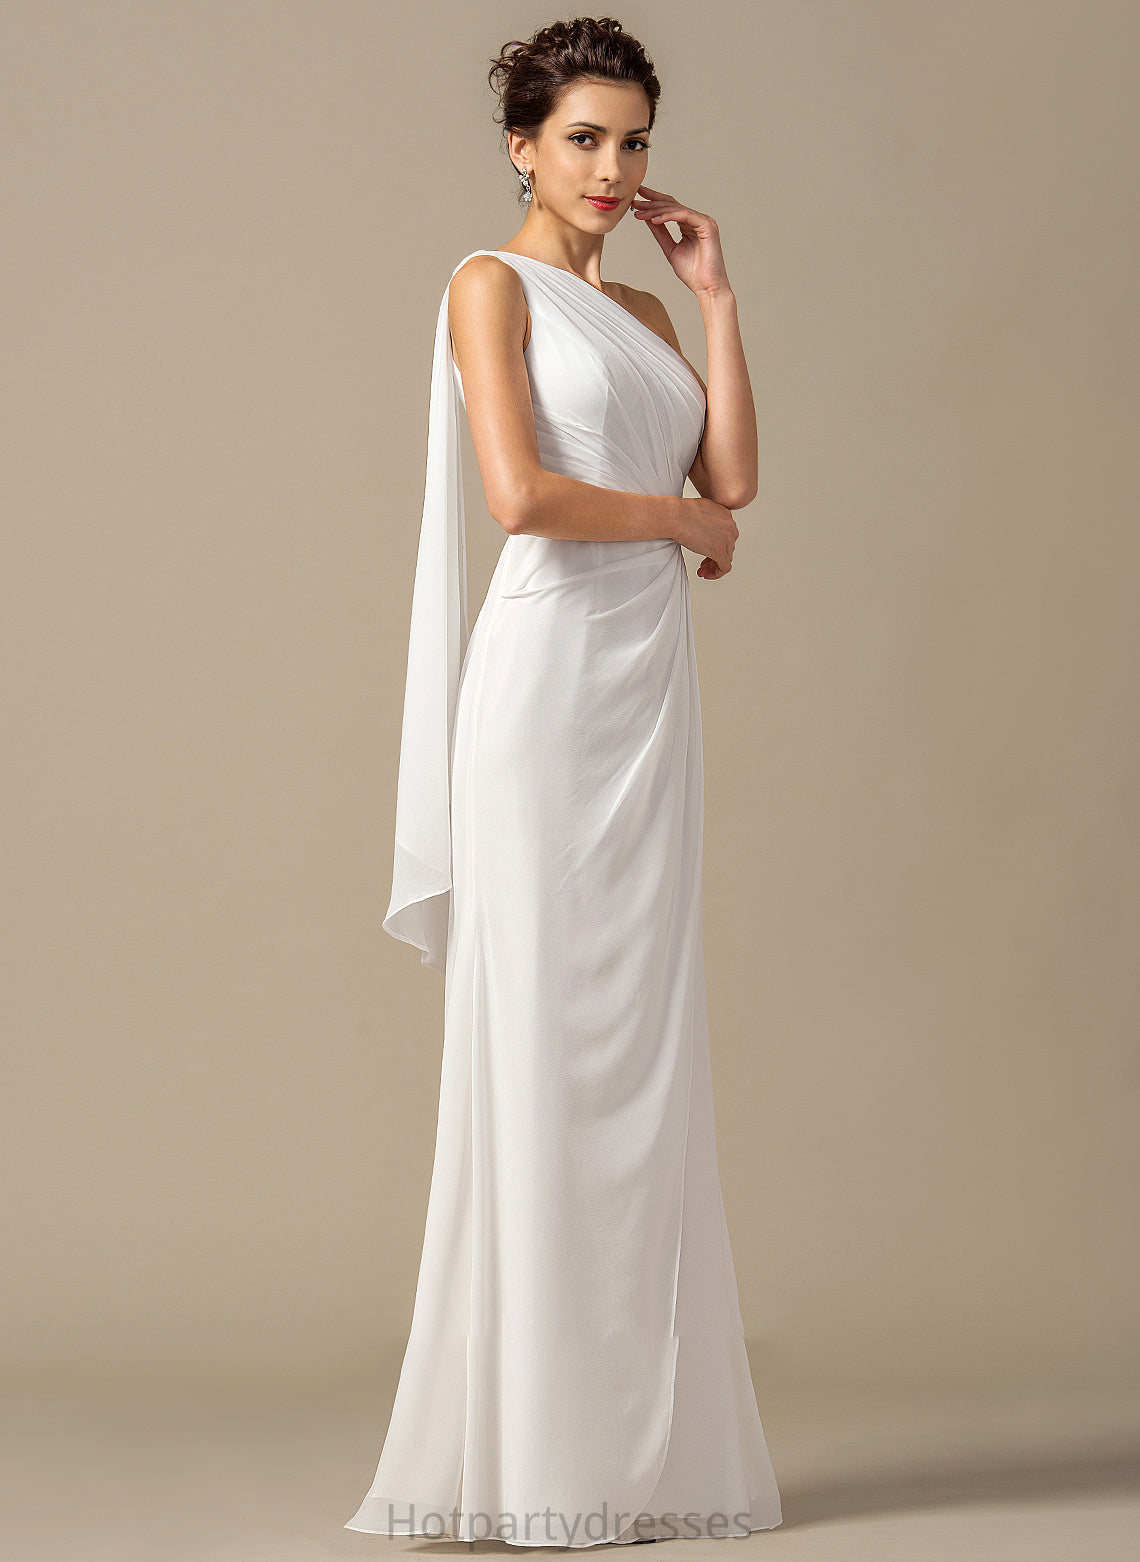 Embellishment Sheath/Column Neckline One-Shoulder Length Ruffle Floor-Length Silhouette Fabric Jacqueline Sleeveless A-Line/Princess Bridesmaid Dresses